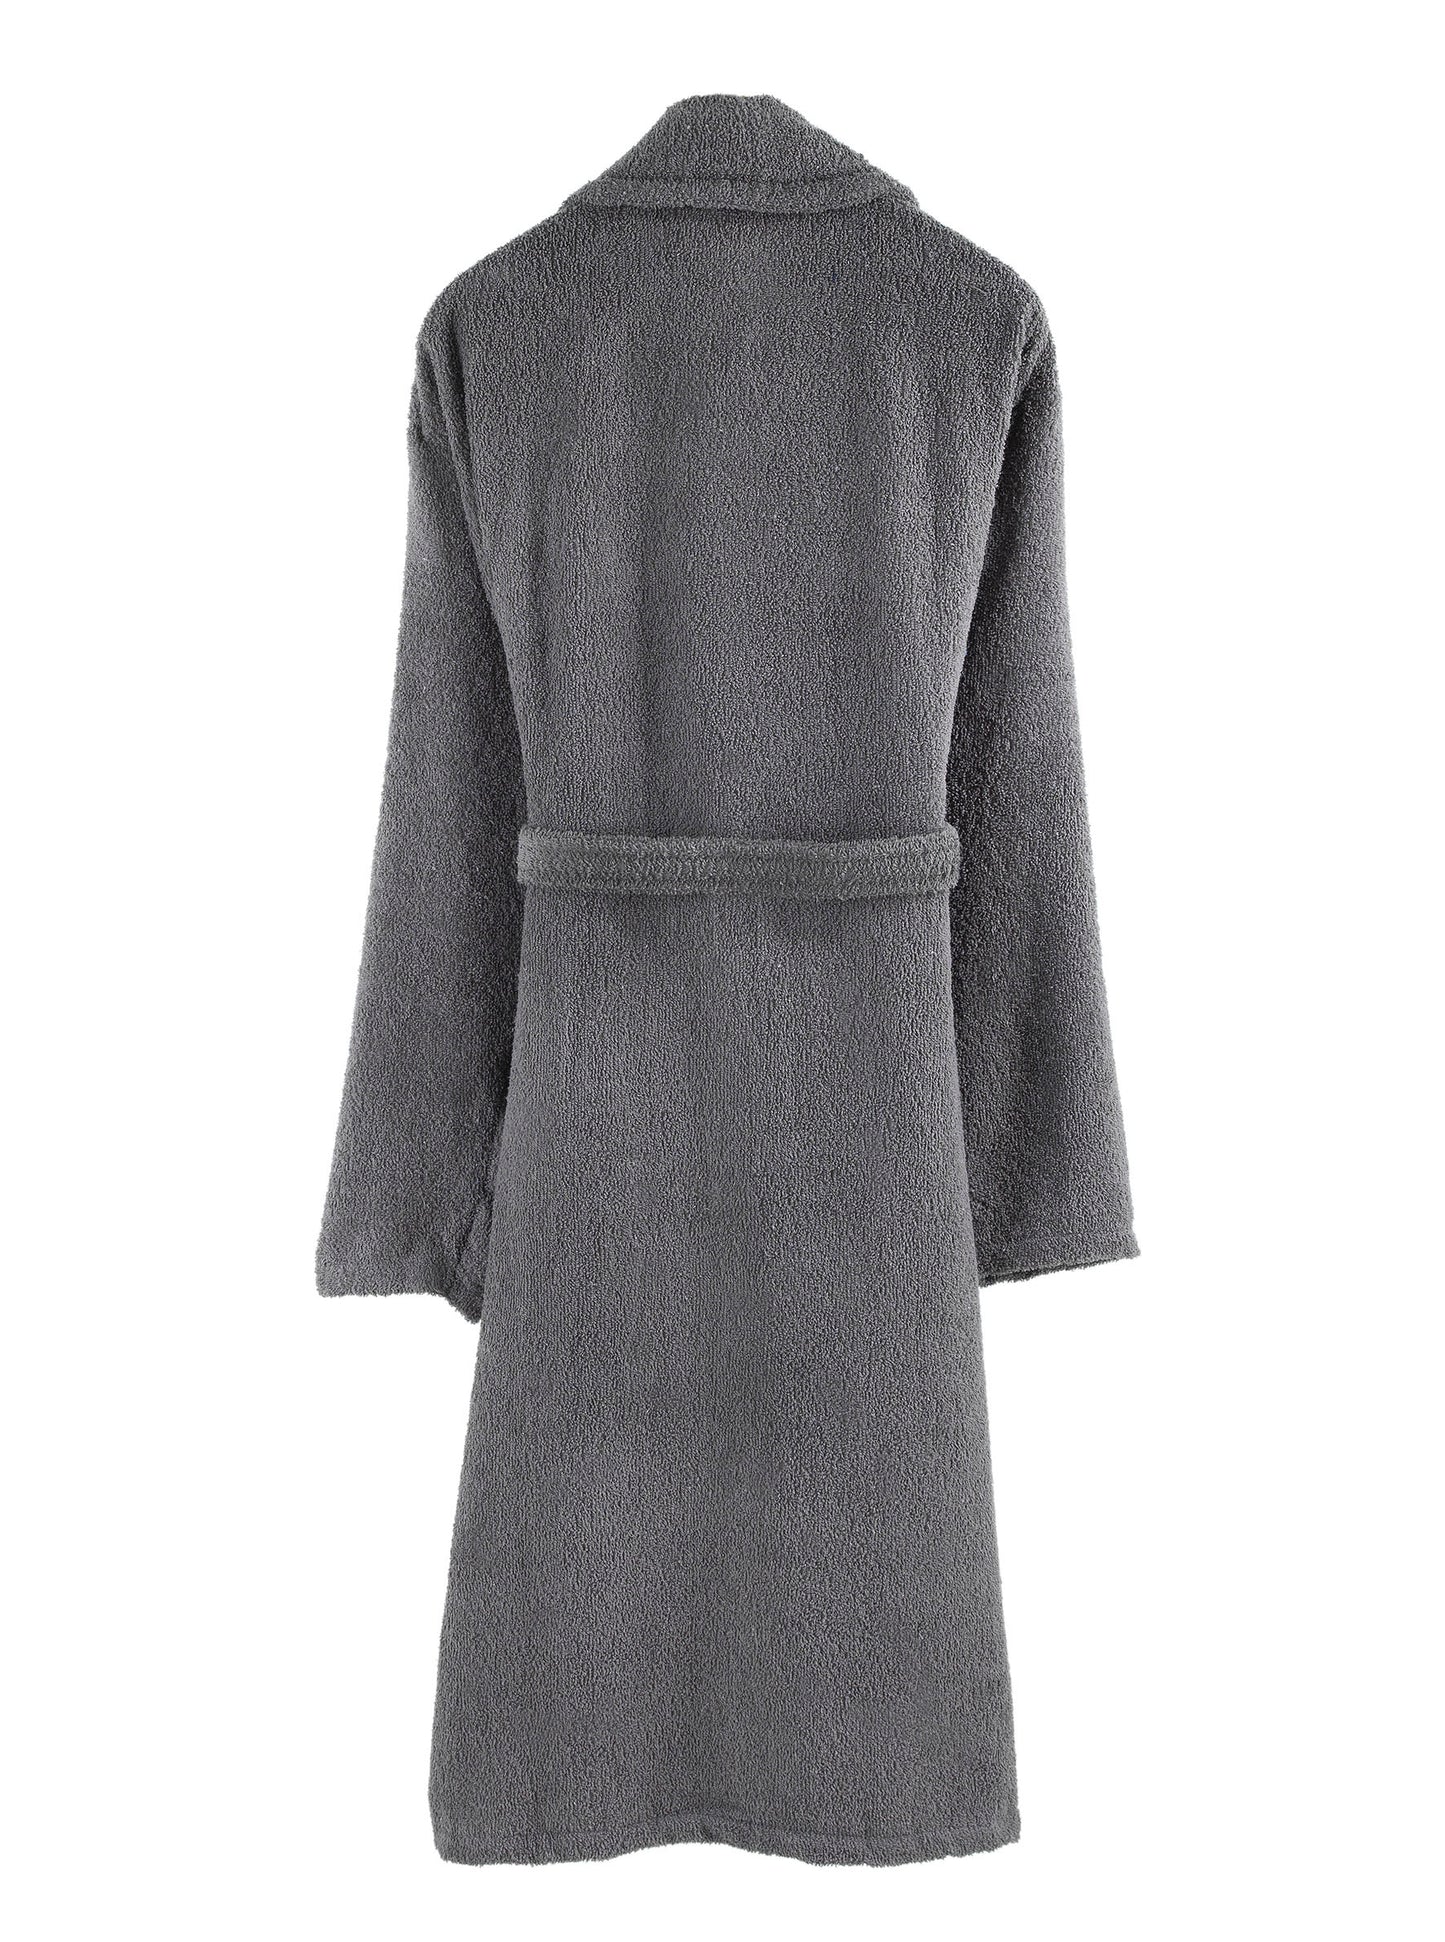 Halley Luxury Bathrobe for Women & Men, Shawl Collar Spa Bath Robes Terry Cotton Ultra Soft Shower Robe with Pockets Grey (XL)